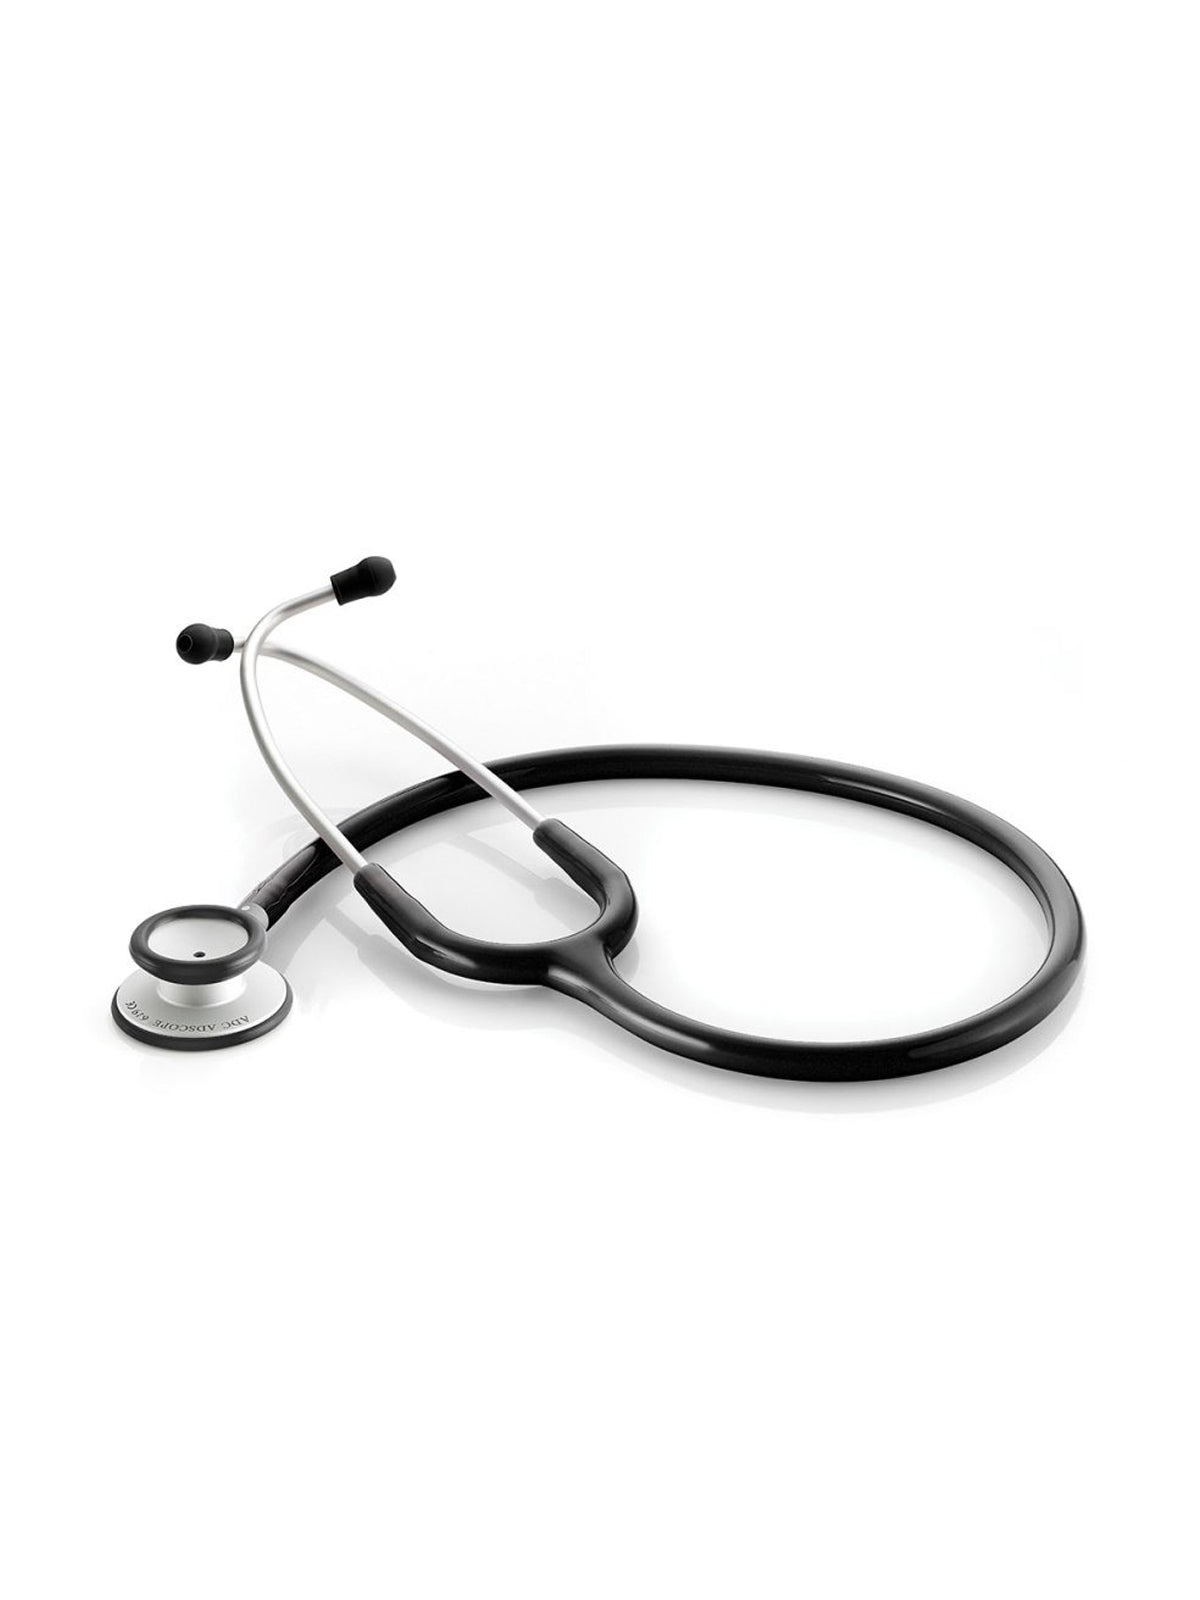 Adscope® Lite Ultra-lite Clinician Stethoscope - 619 - Black